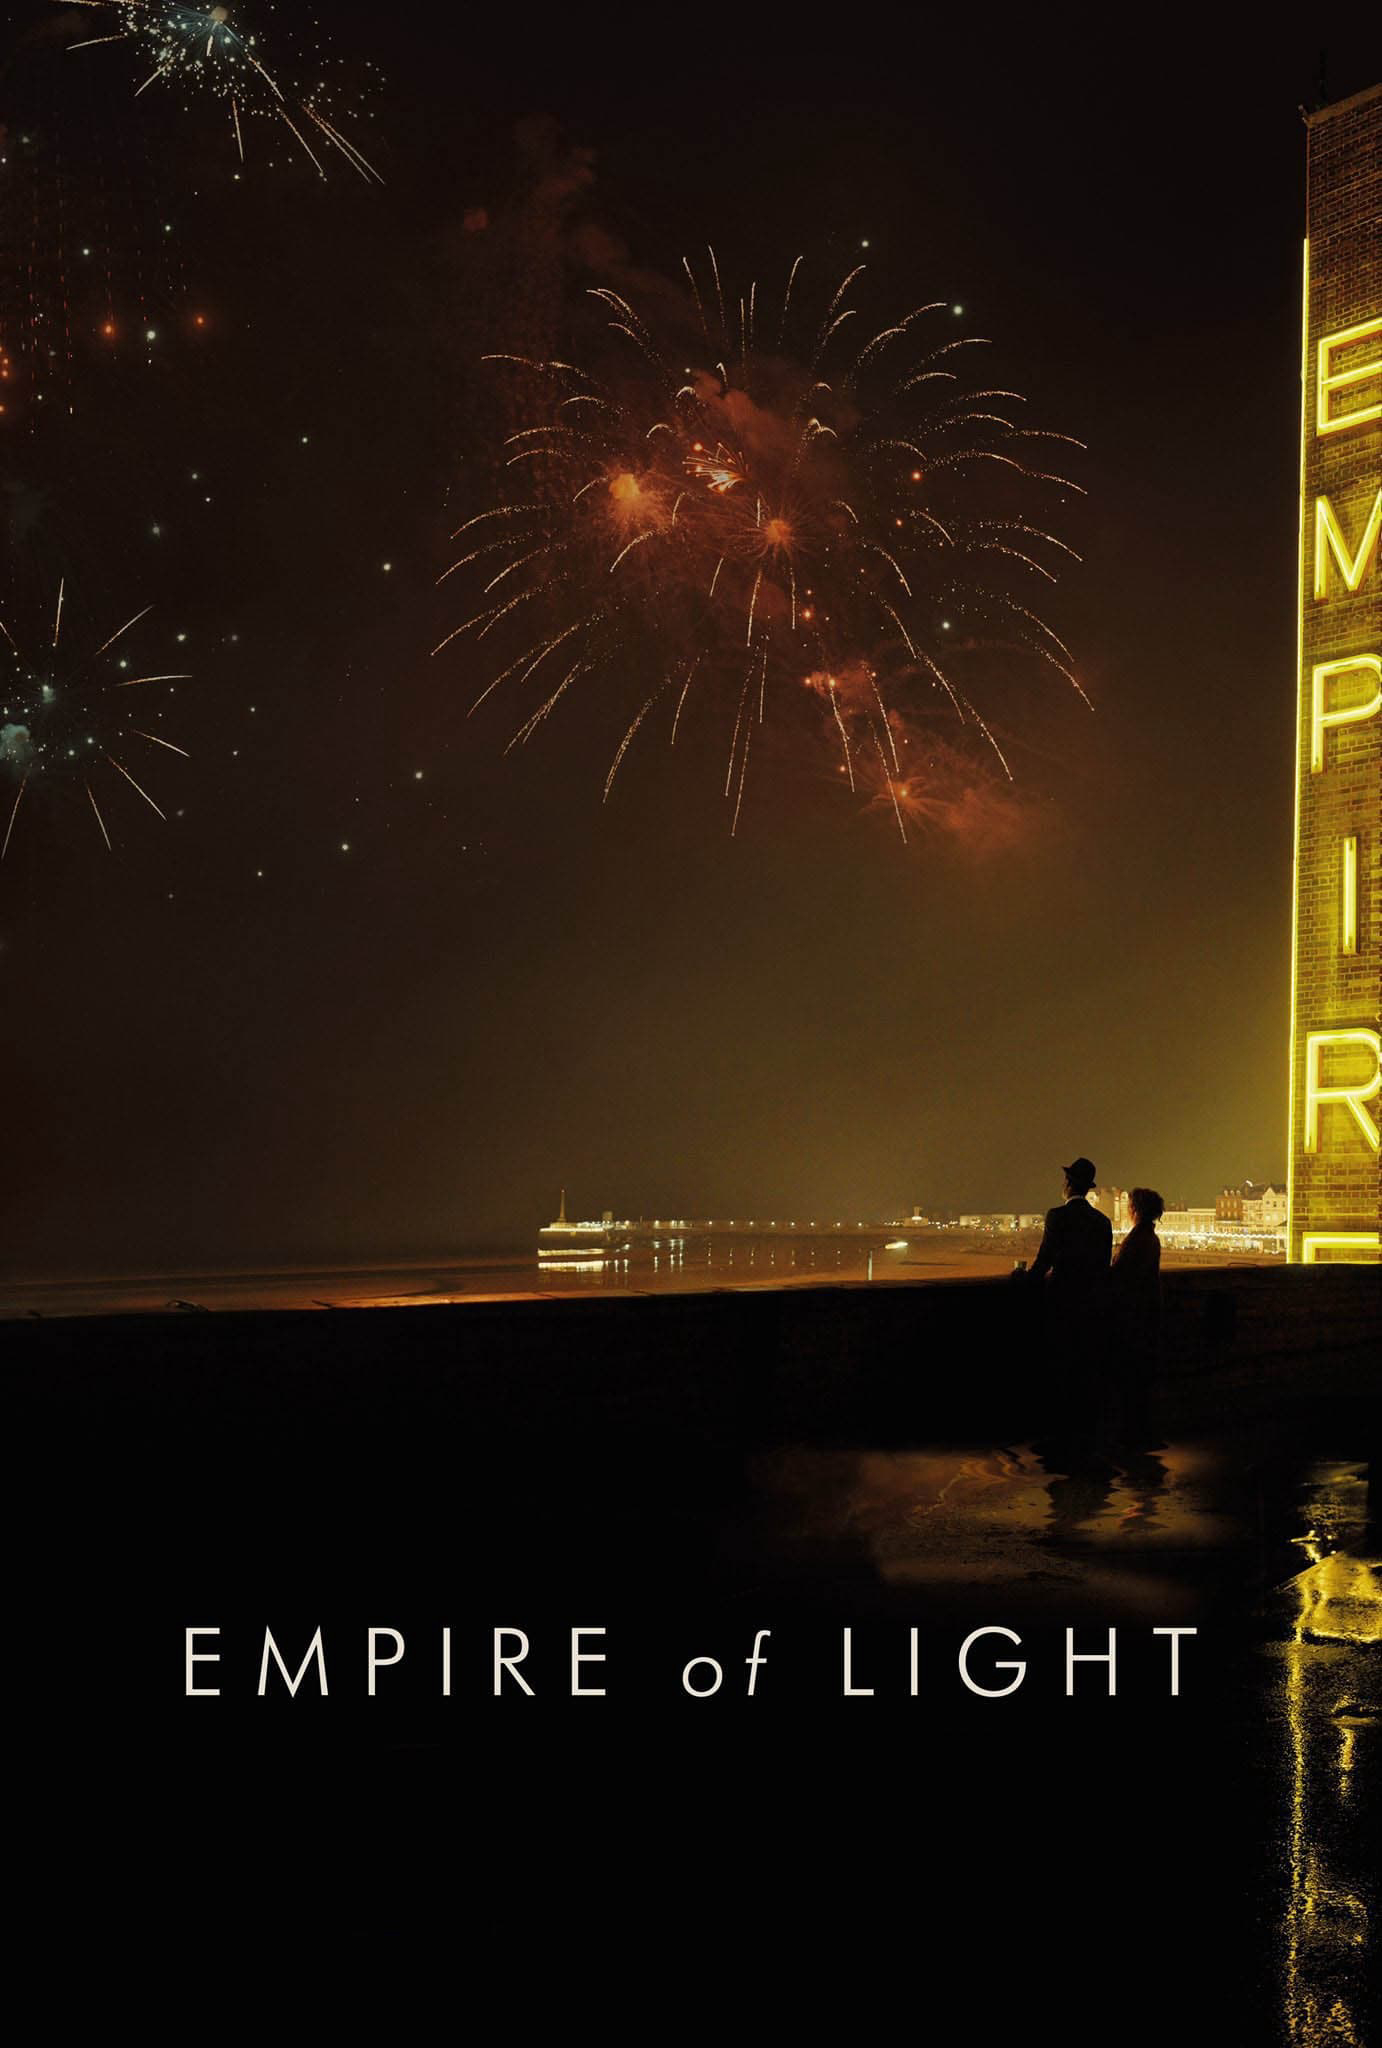 Empire of Light - Empire of Light